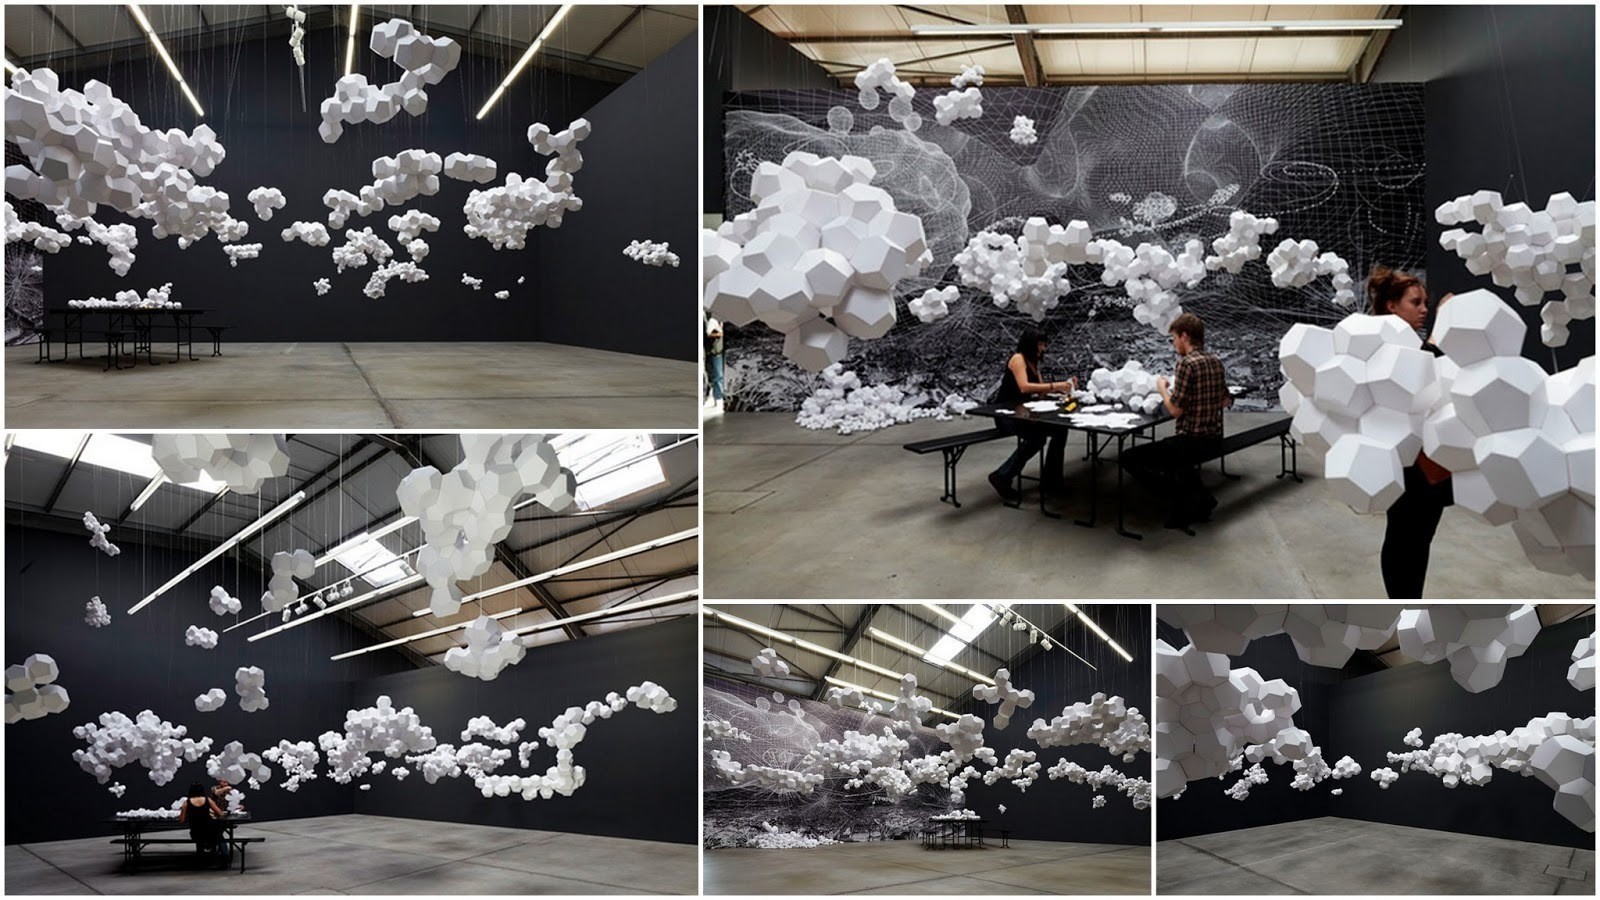 Tomas Saraceno, Cloudy House, 2009, Andersens Contemporary, Berlin, Germany